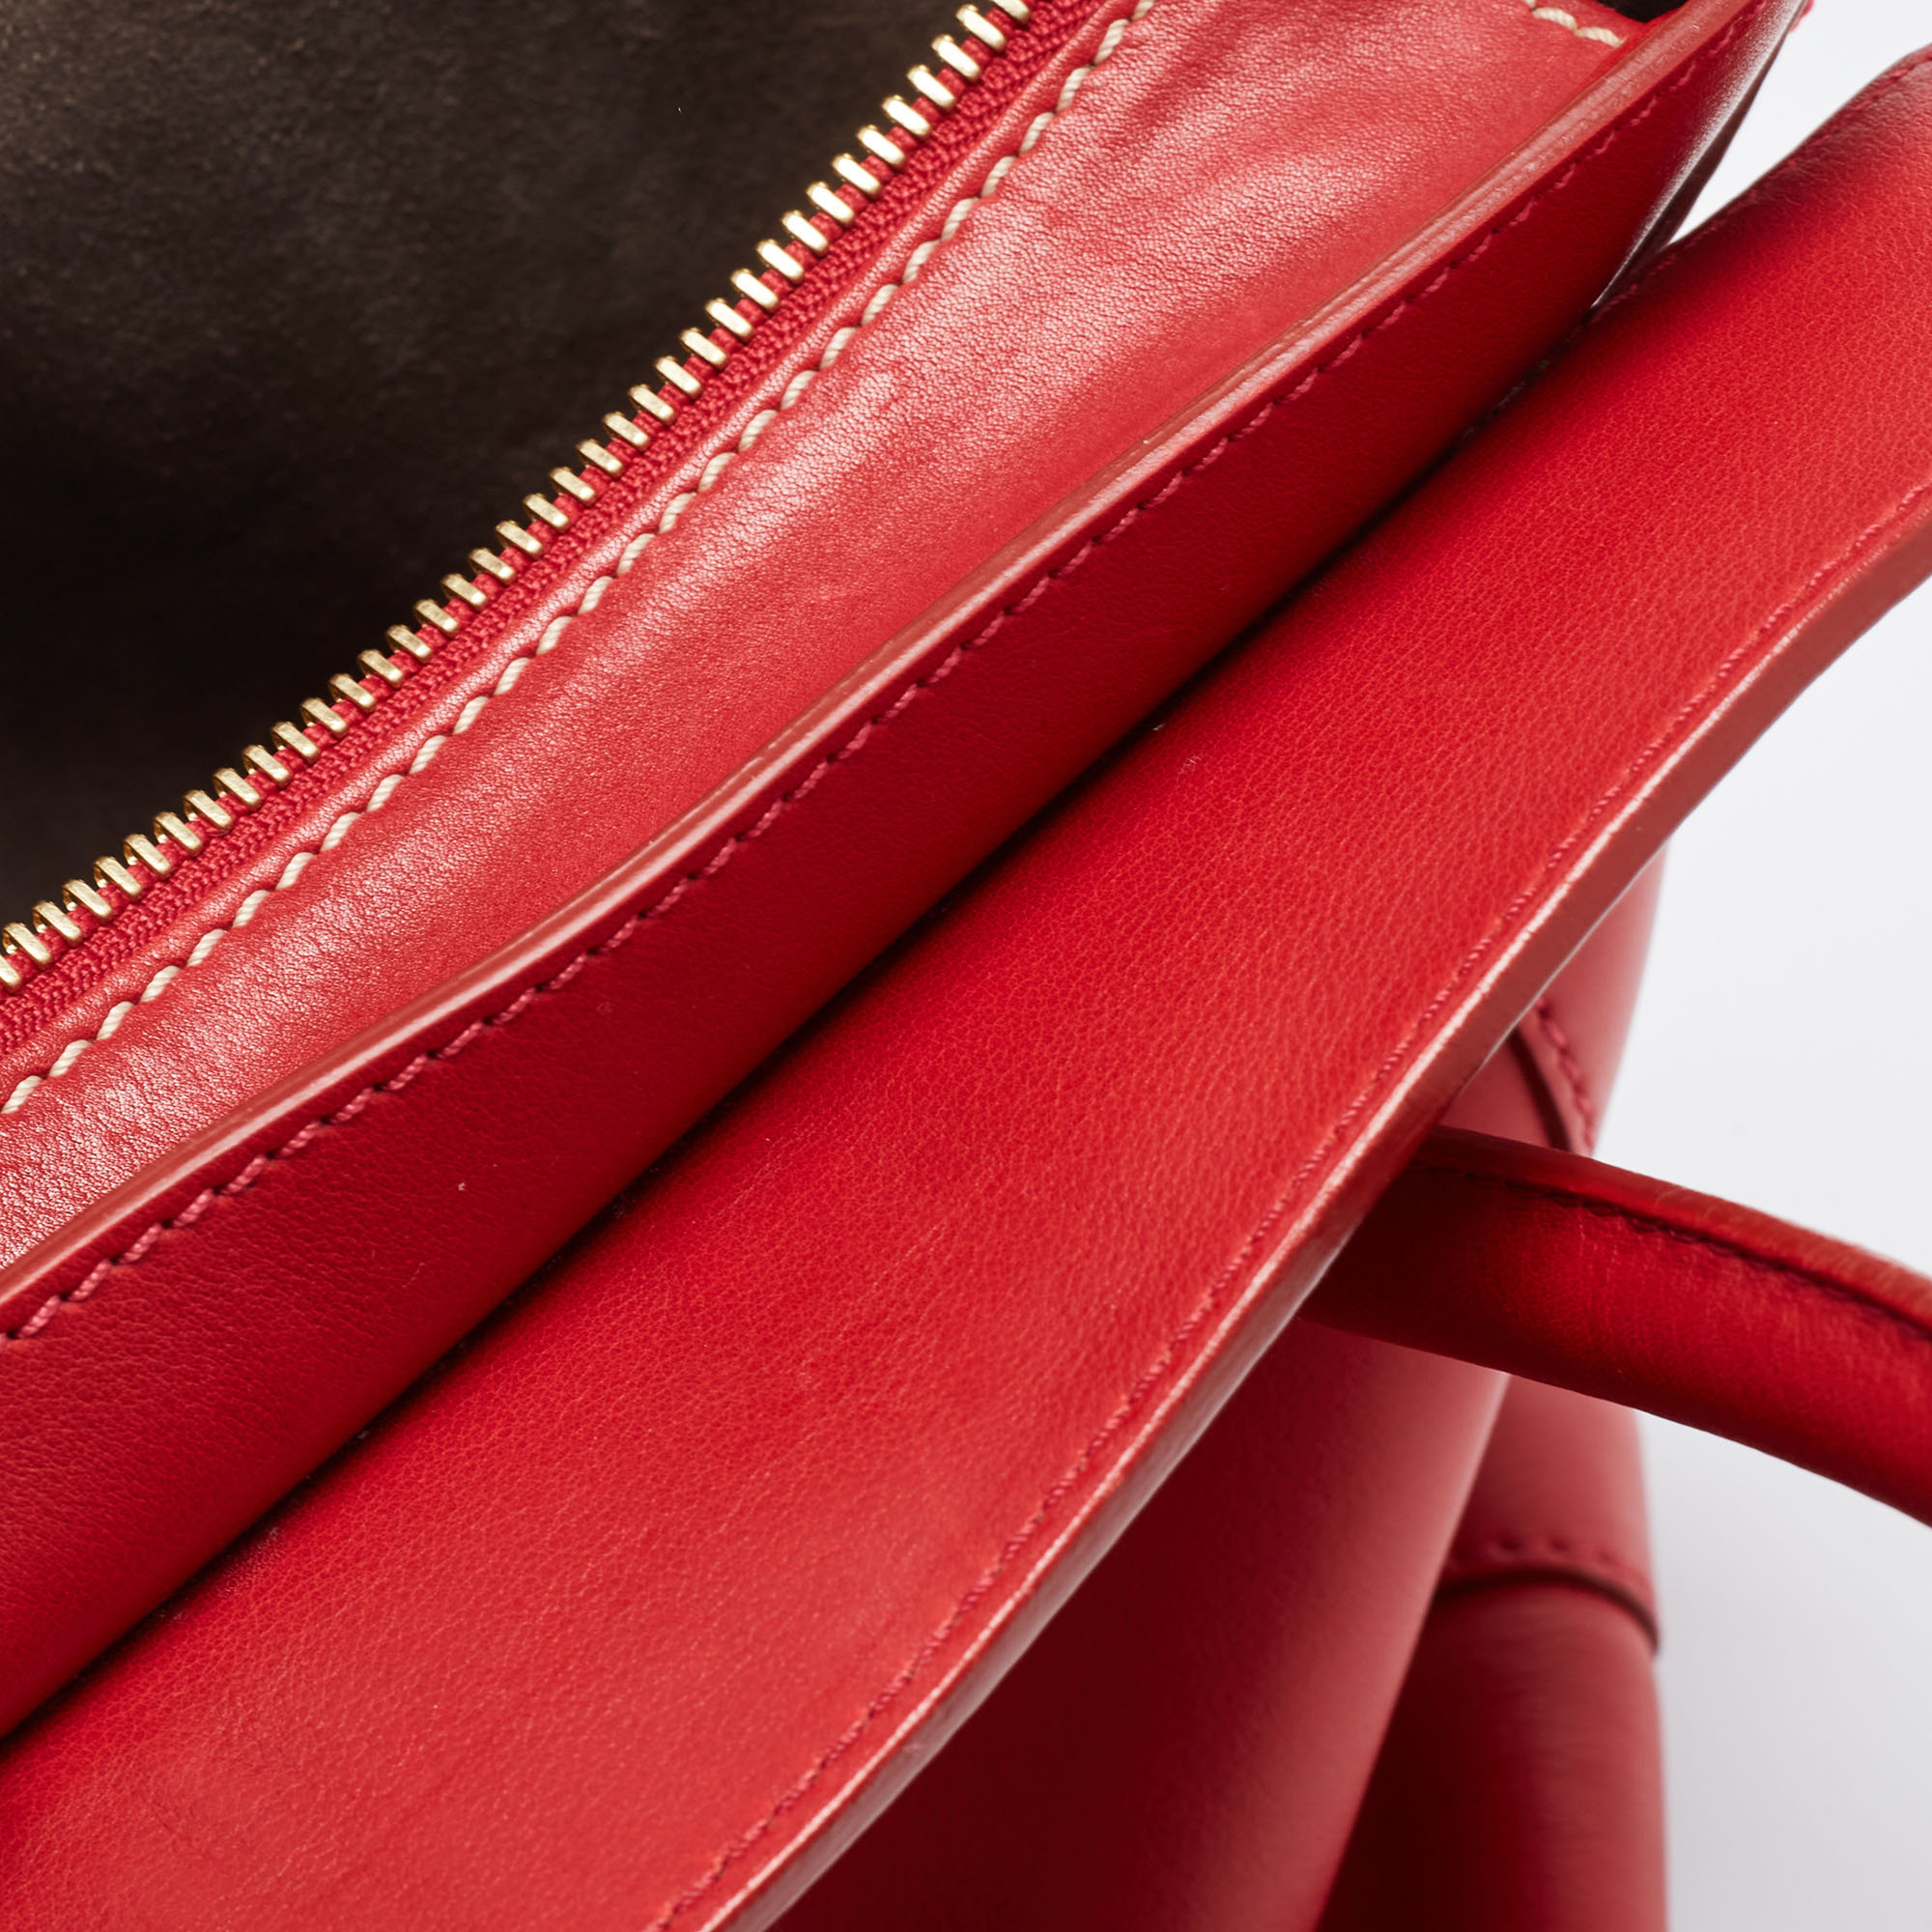 Celine Red Leather Mini Envelope Luggage Tote